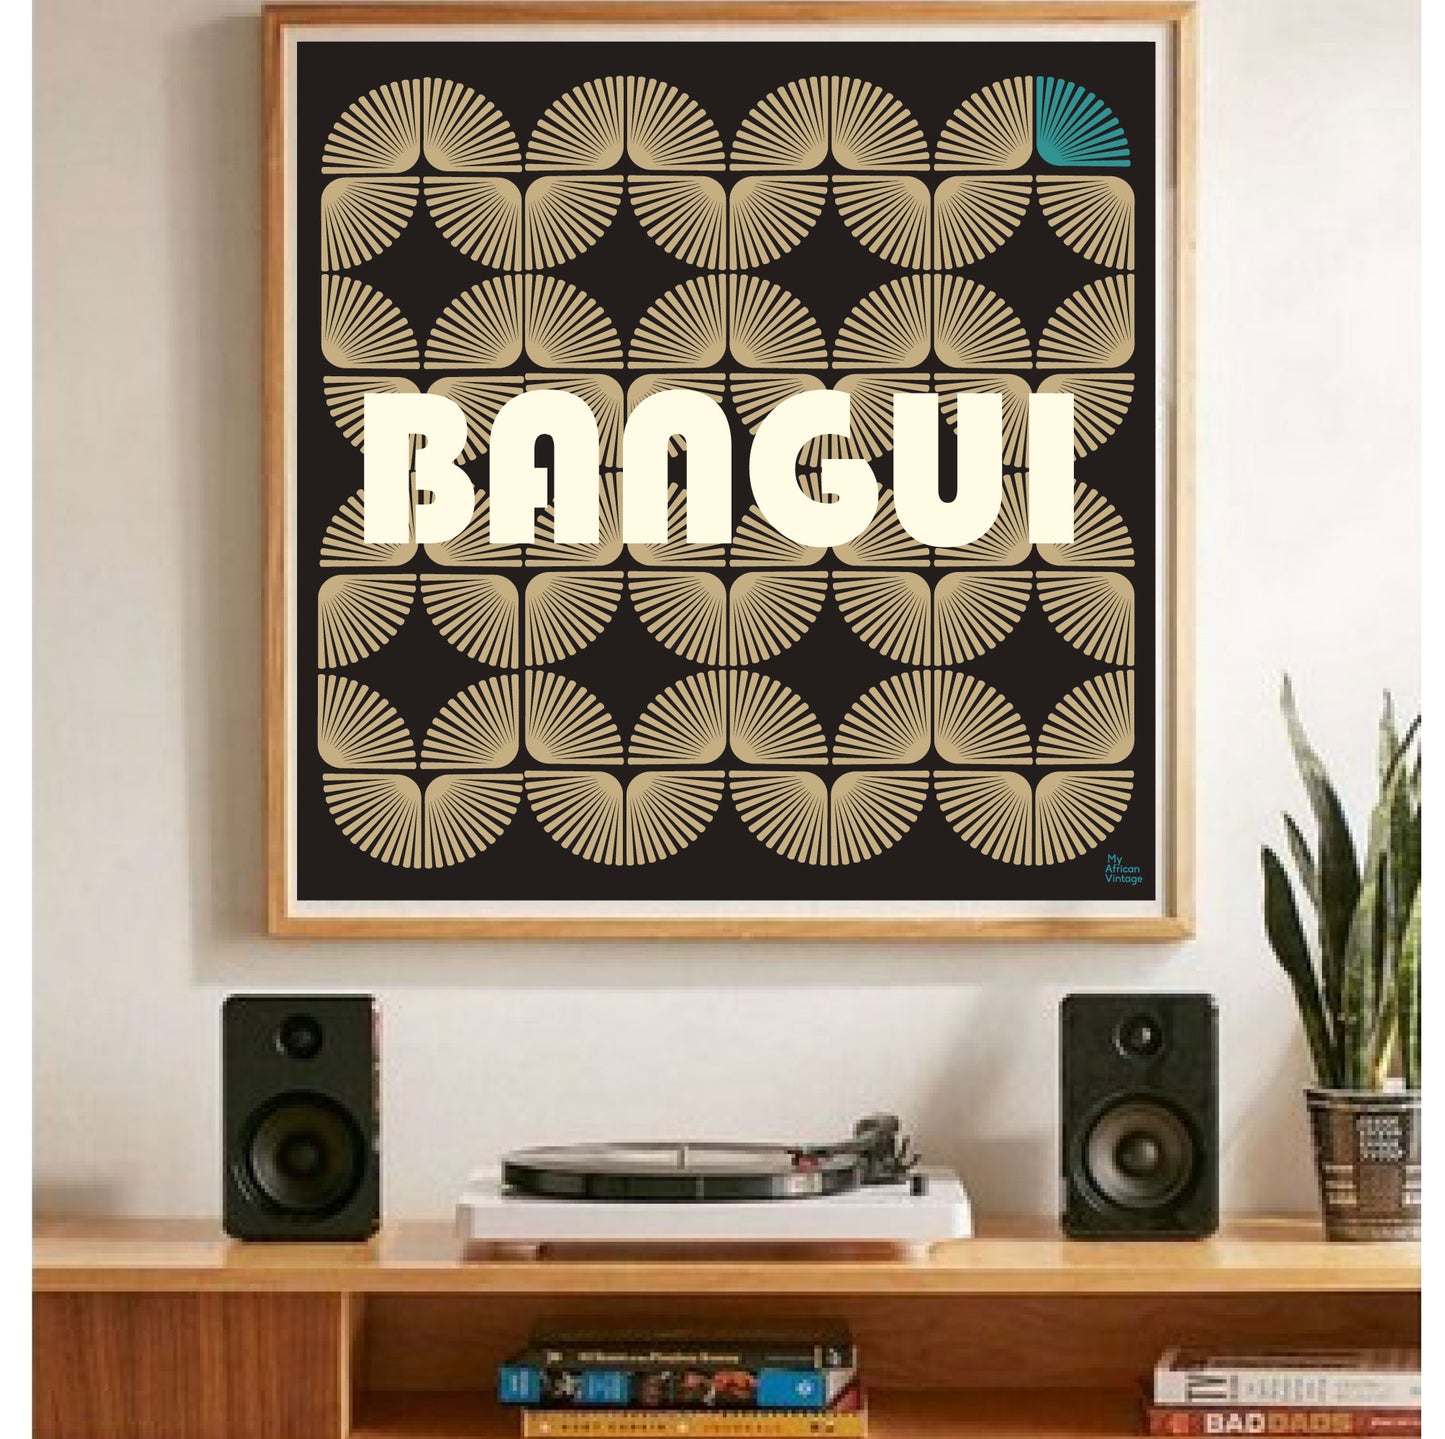 Affiche style rétro "Bangui" - collection "My African Vintage"